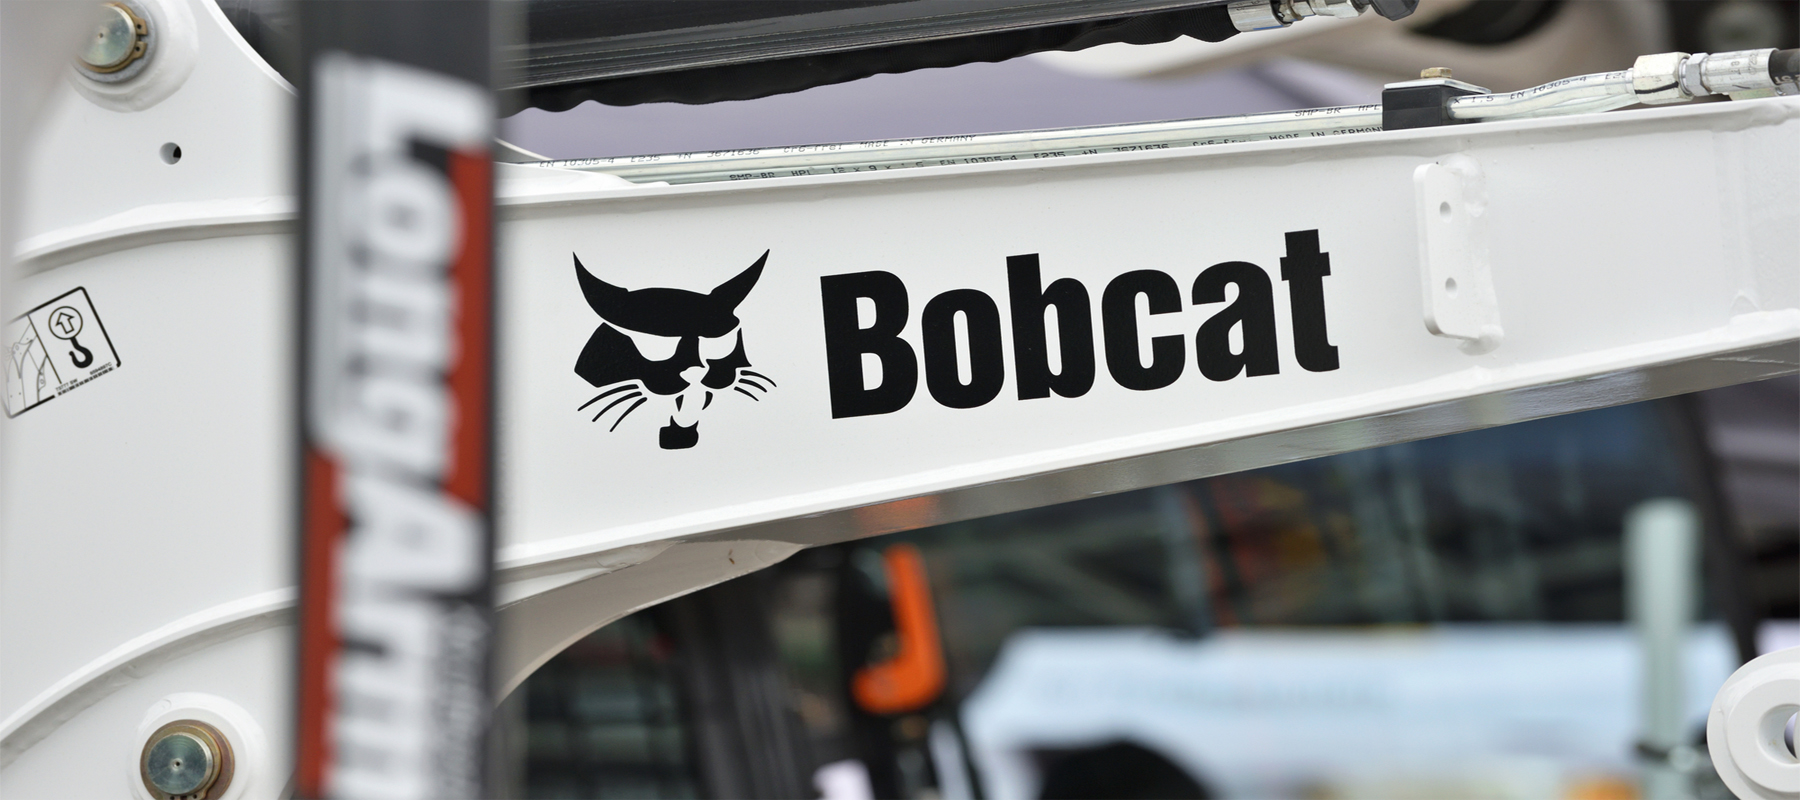 Bobcat Logo on an Excavator